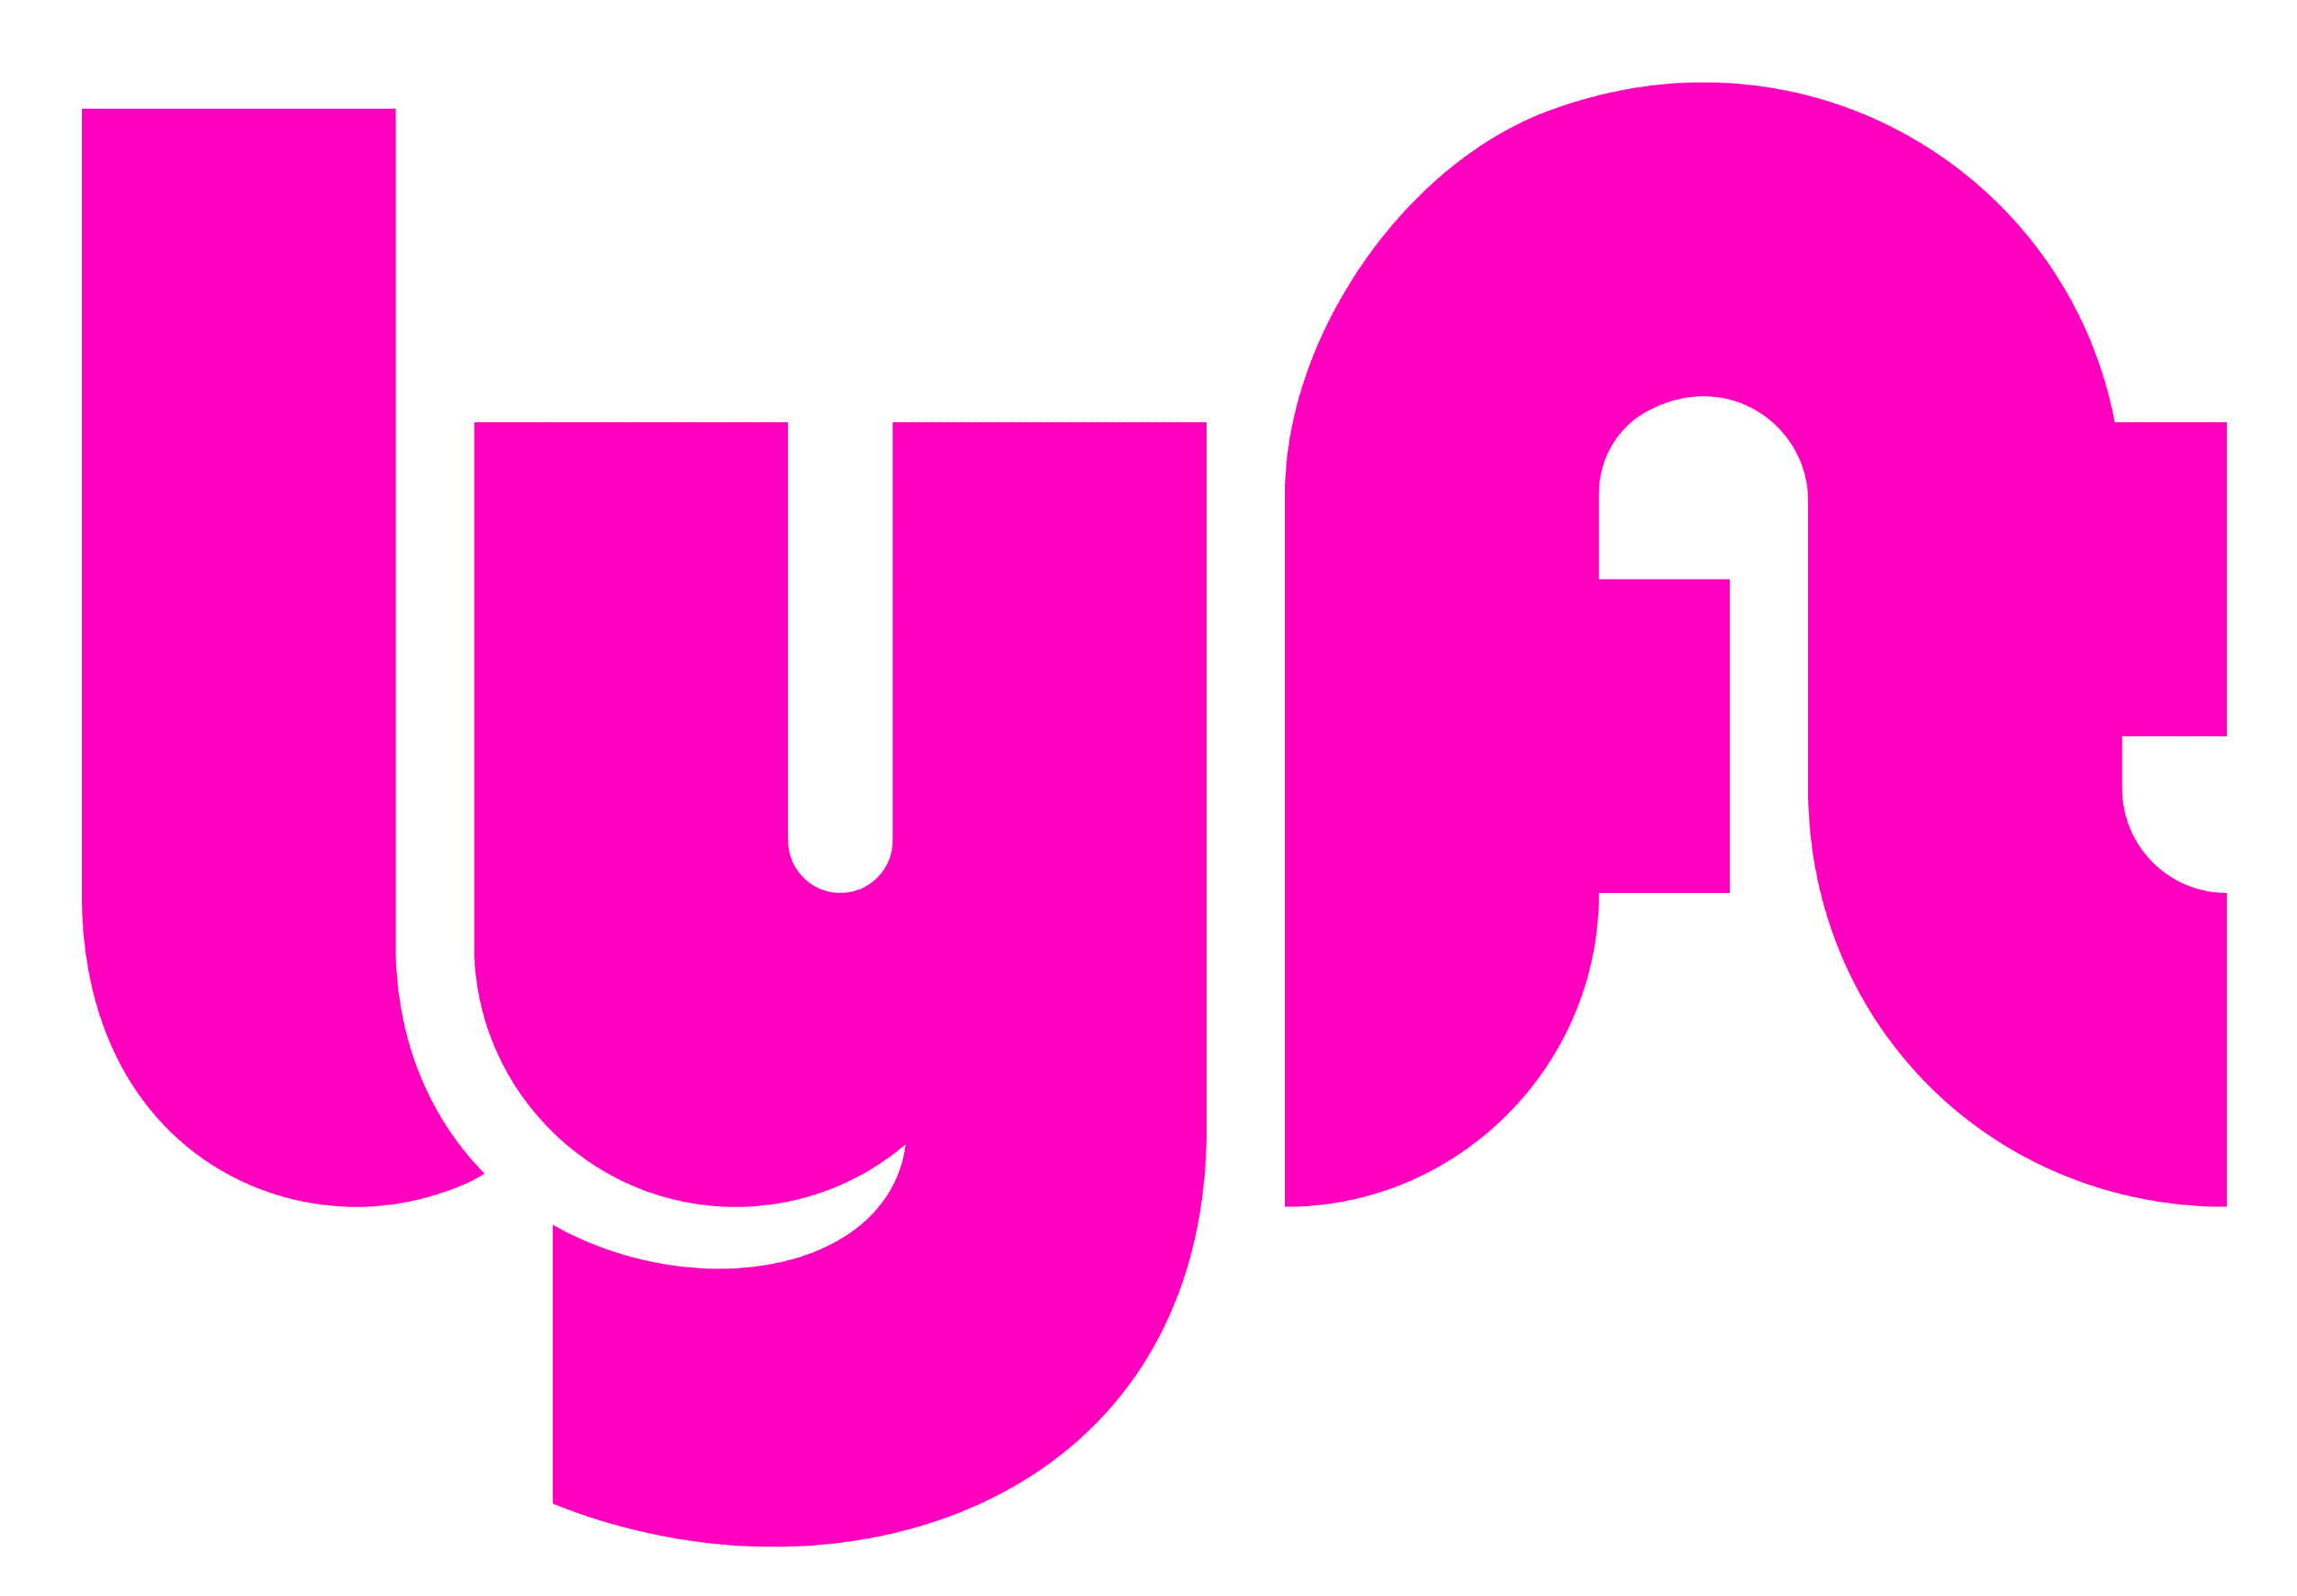 The lyft logo